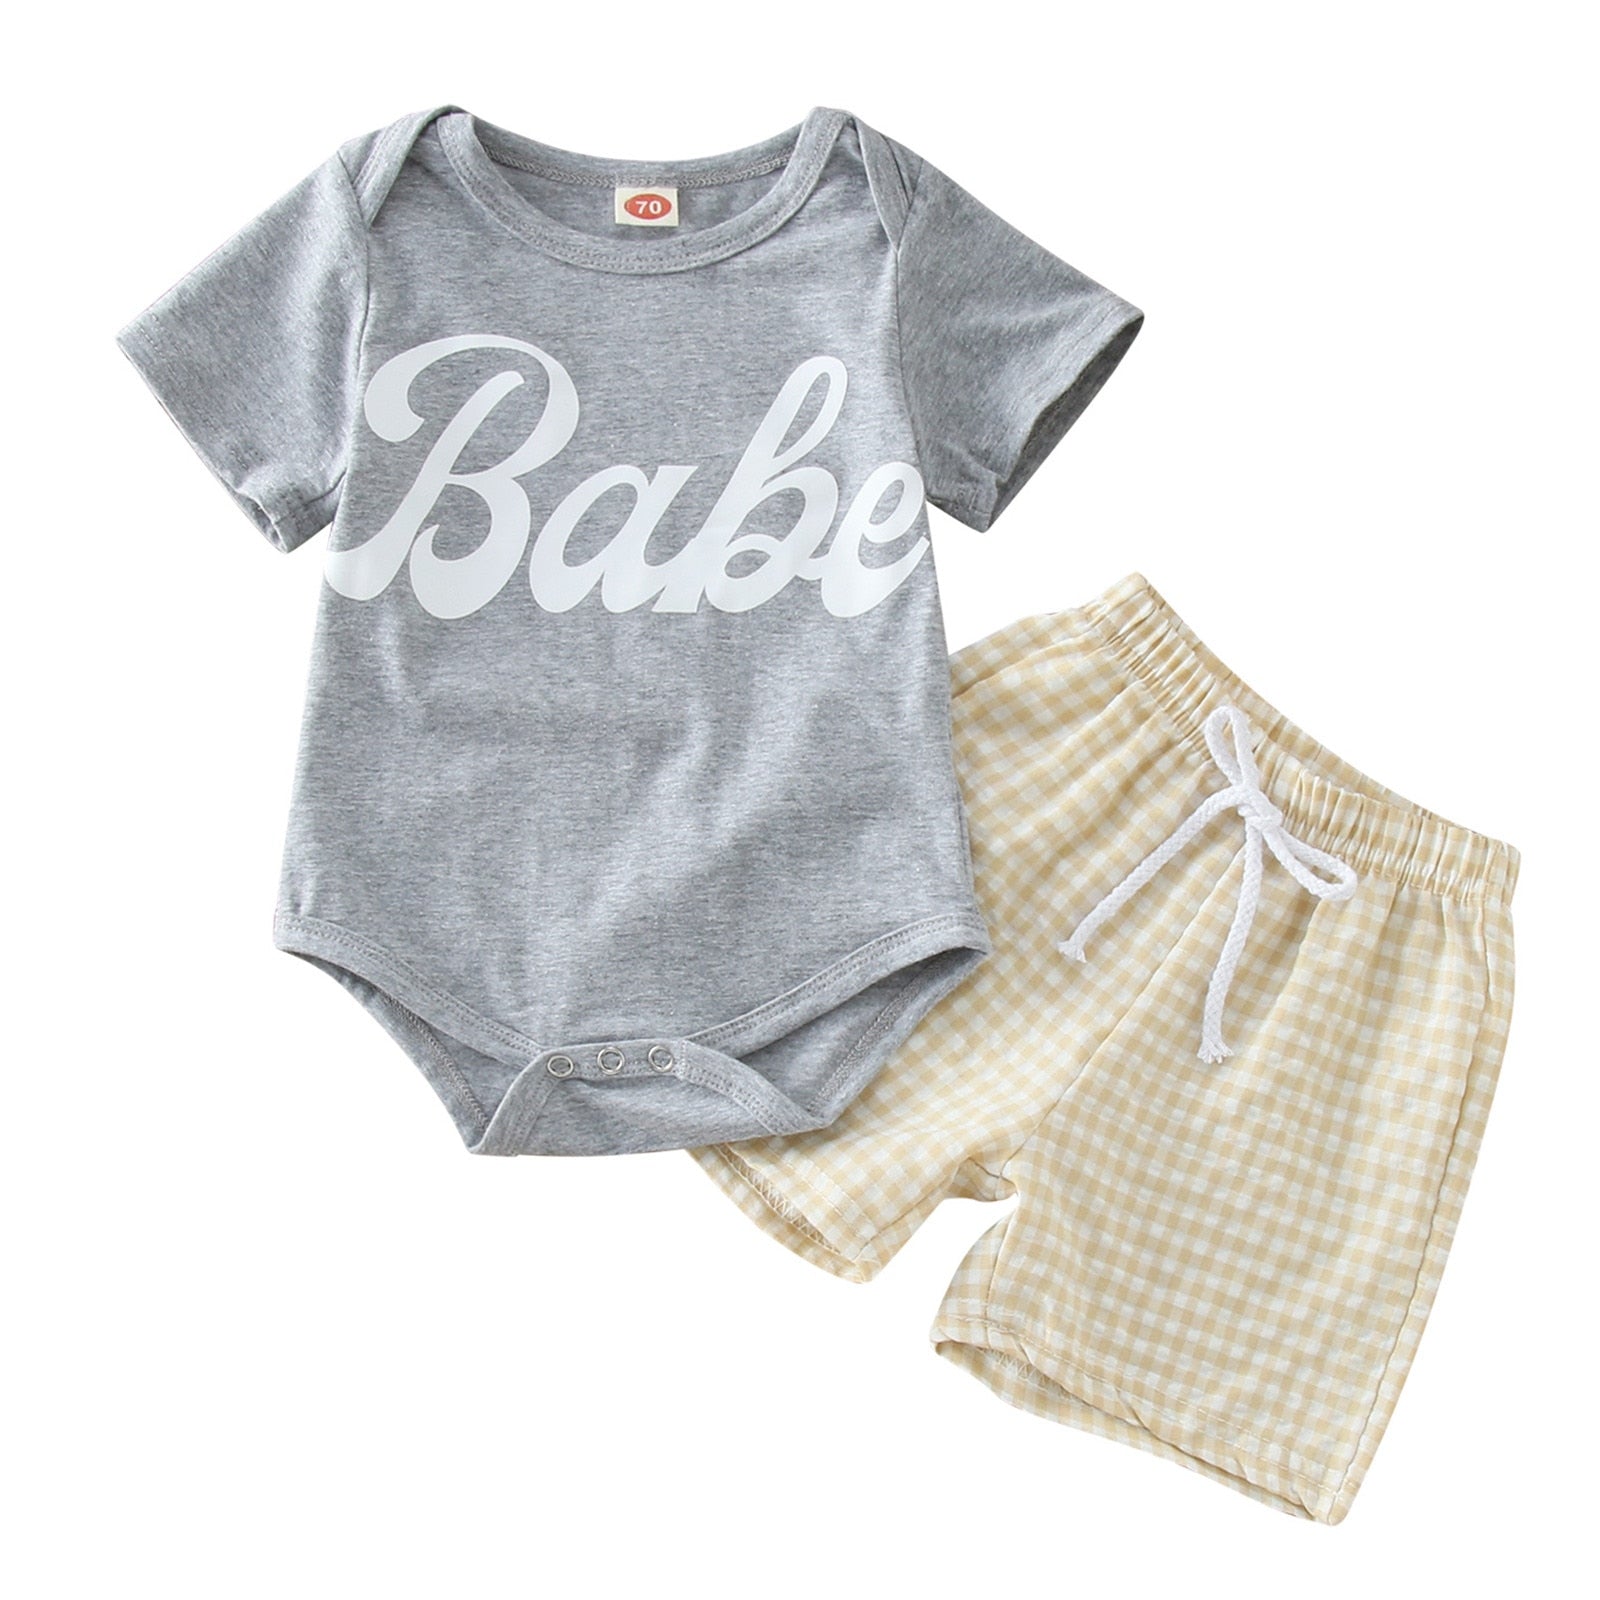 Adorable Newborn Infant Boys Girls Clothes Set for Summer